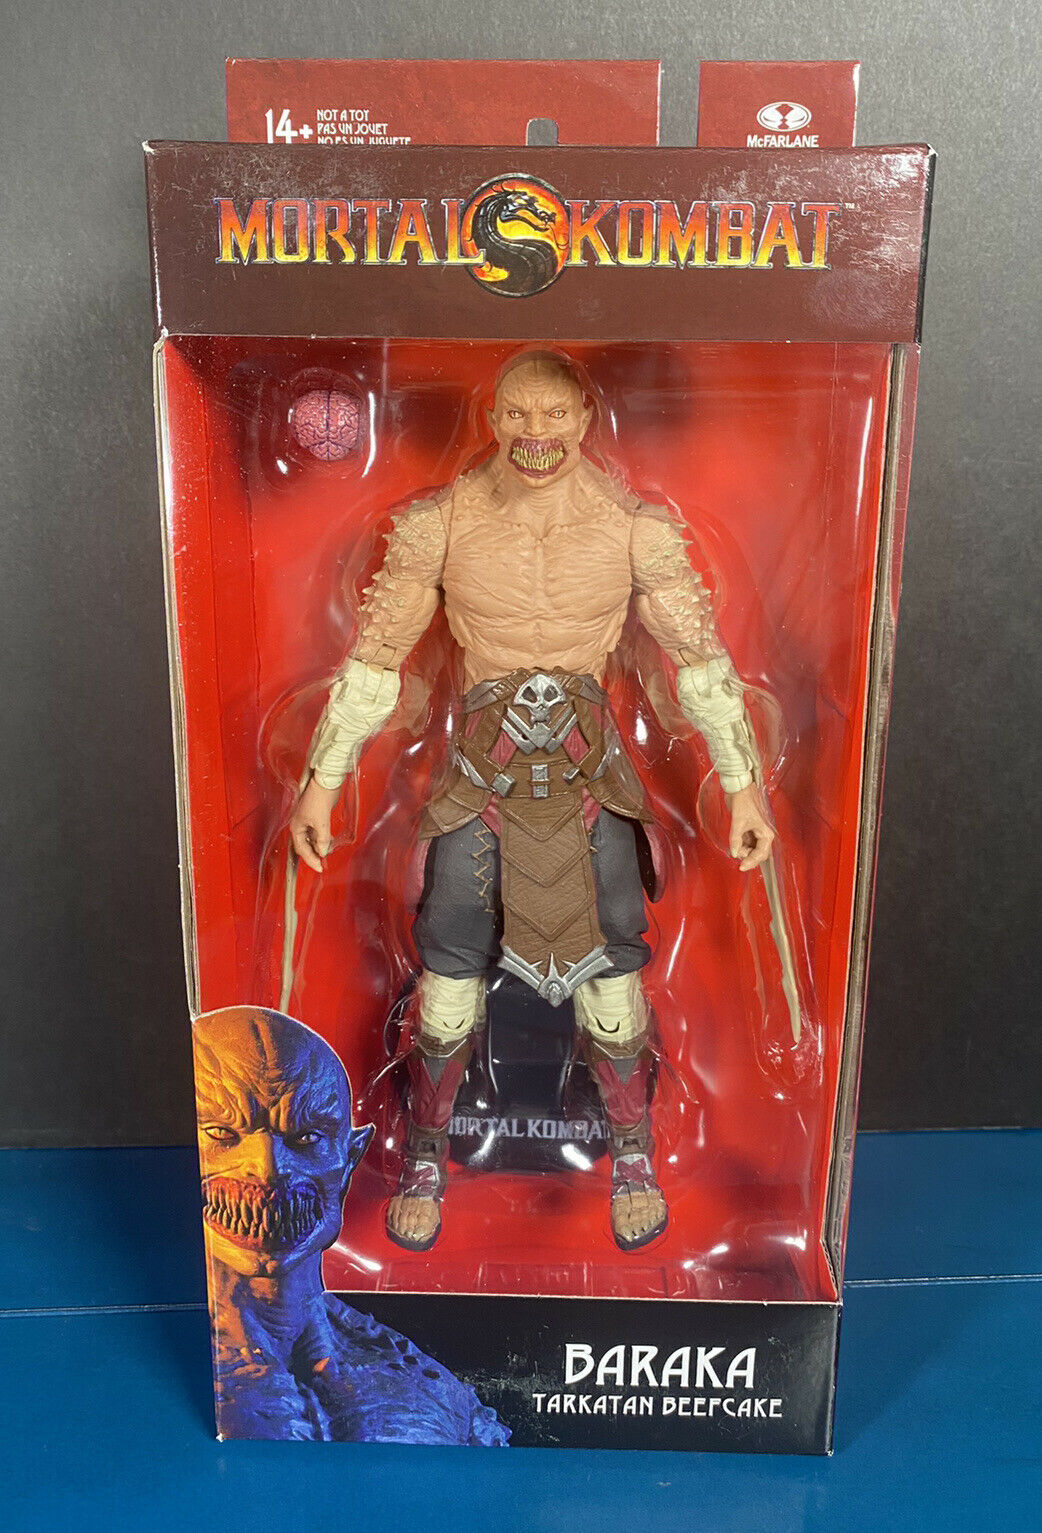  McFarlane Toys Mortal Kombat Baraka Action Figure